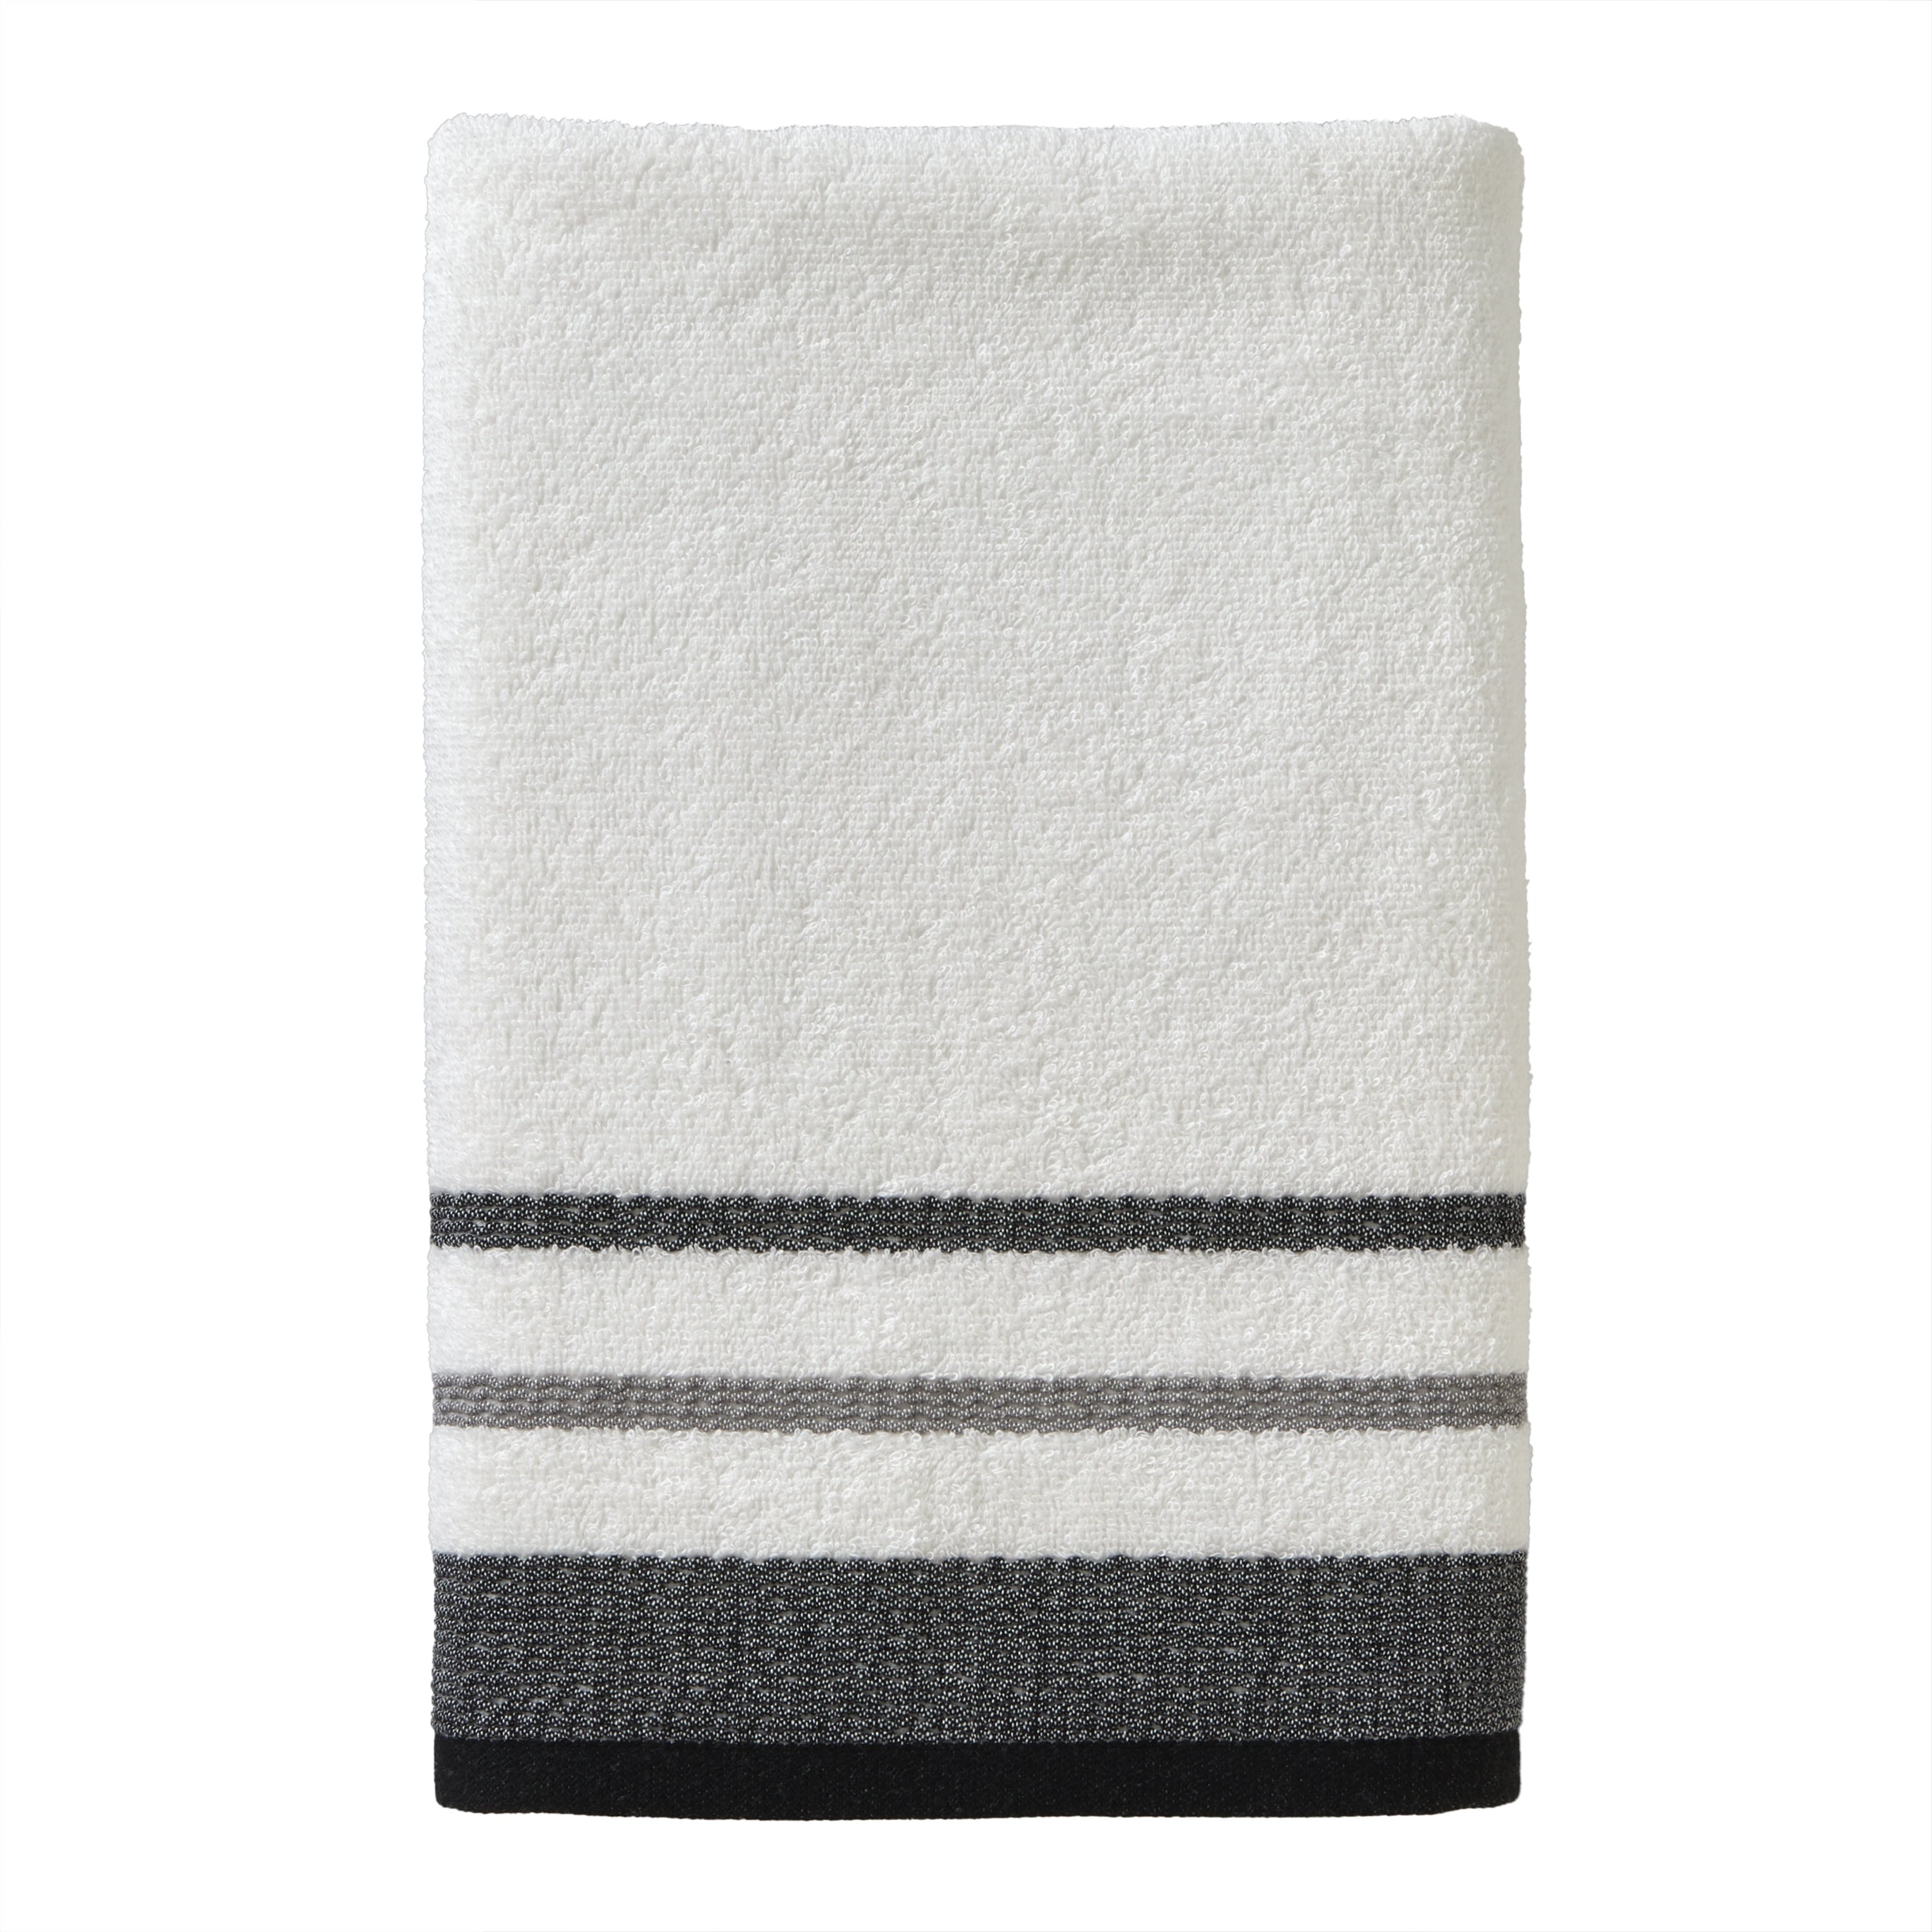 Buffalo Plaid Hanging Cotton Towels - Set of 2